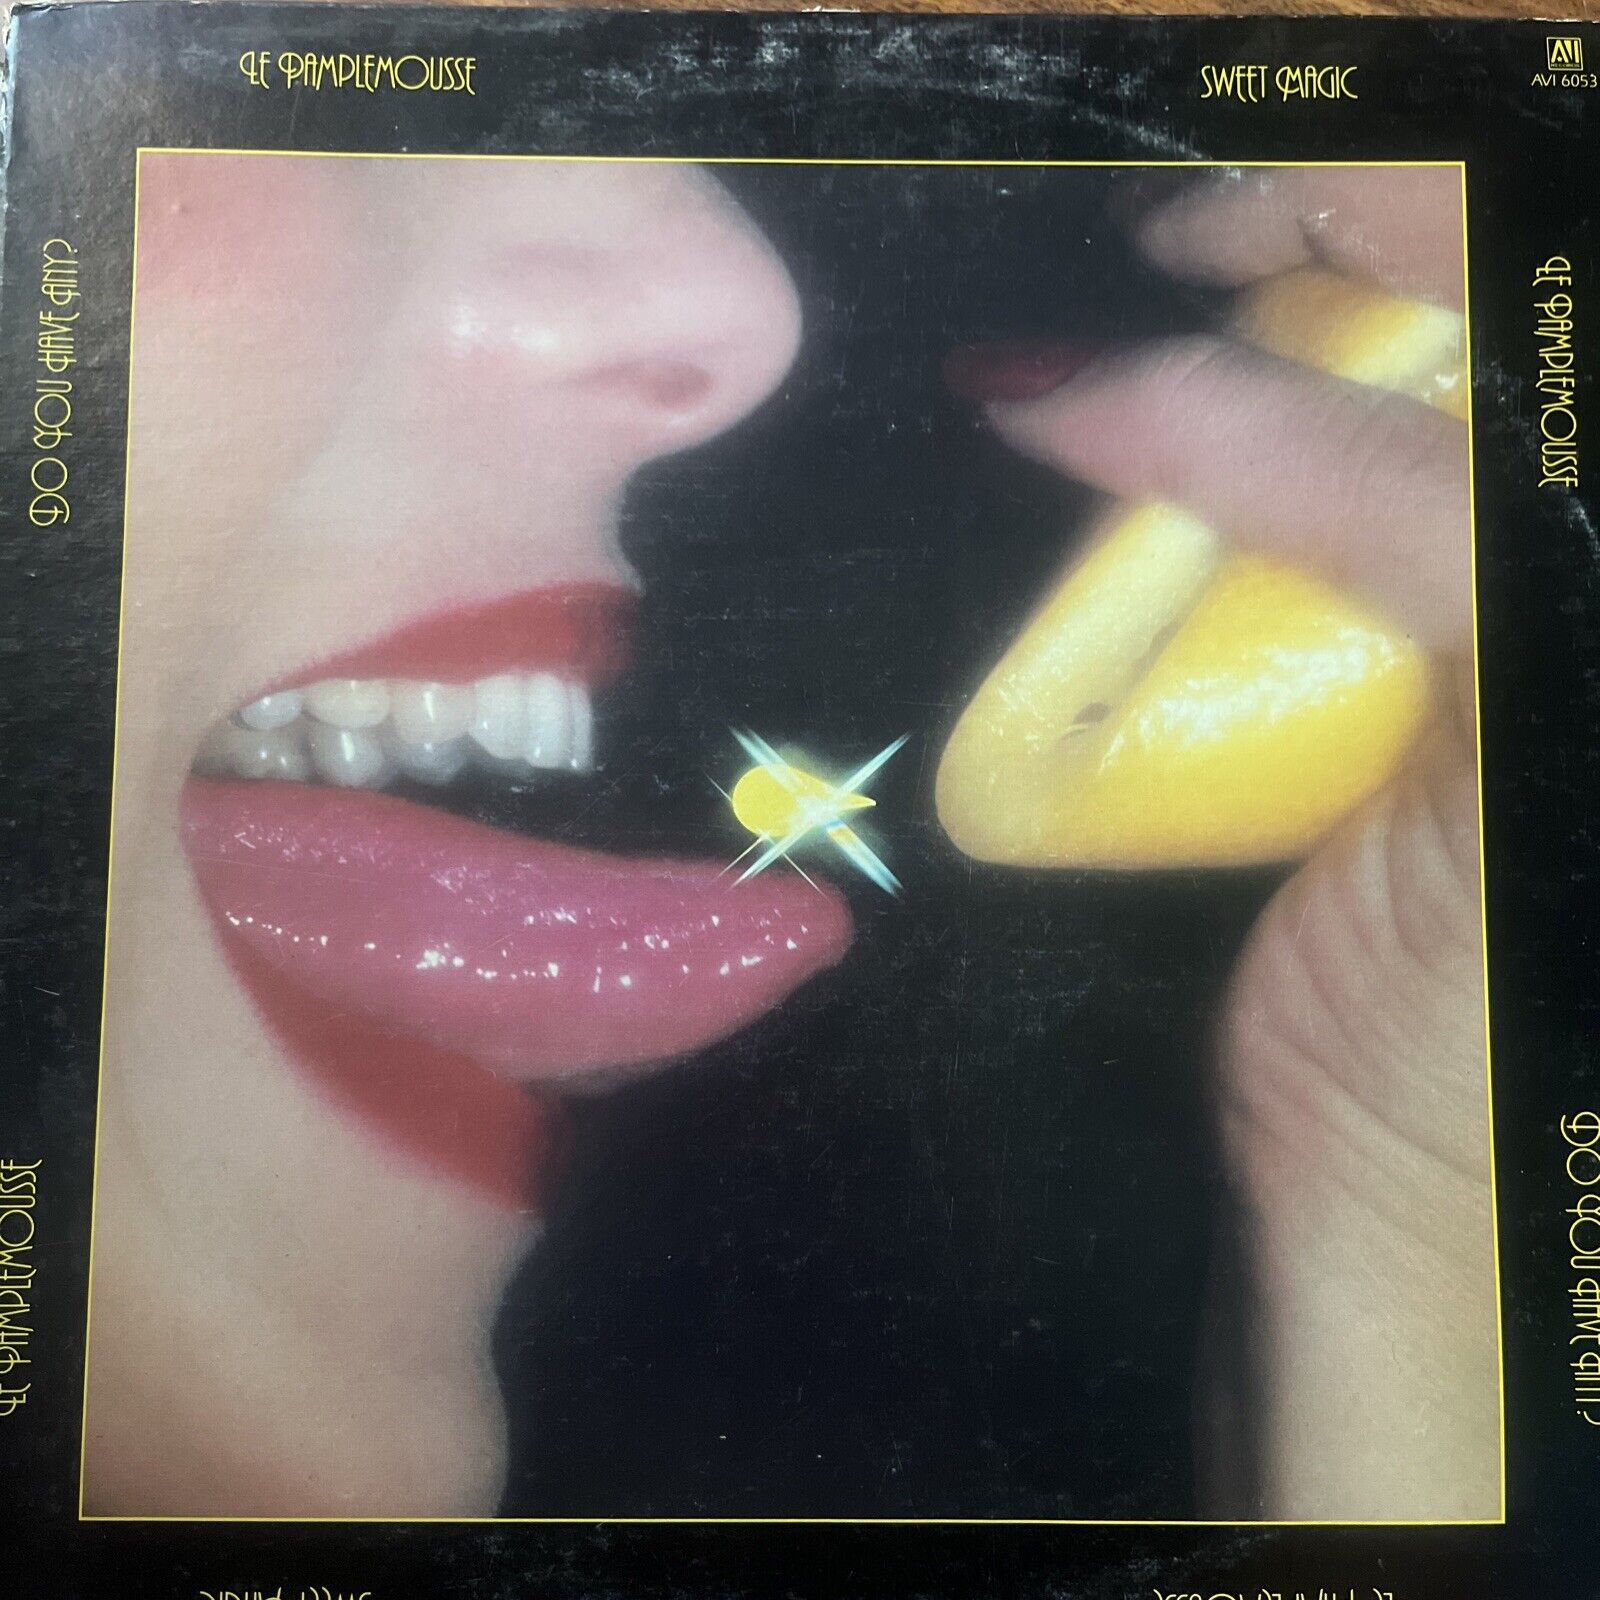 LE PAMPLEMOUSSE - SWEET MAGIC - LATIN DISCO LP [1978]